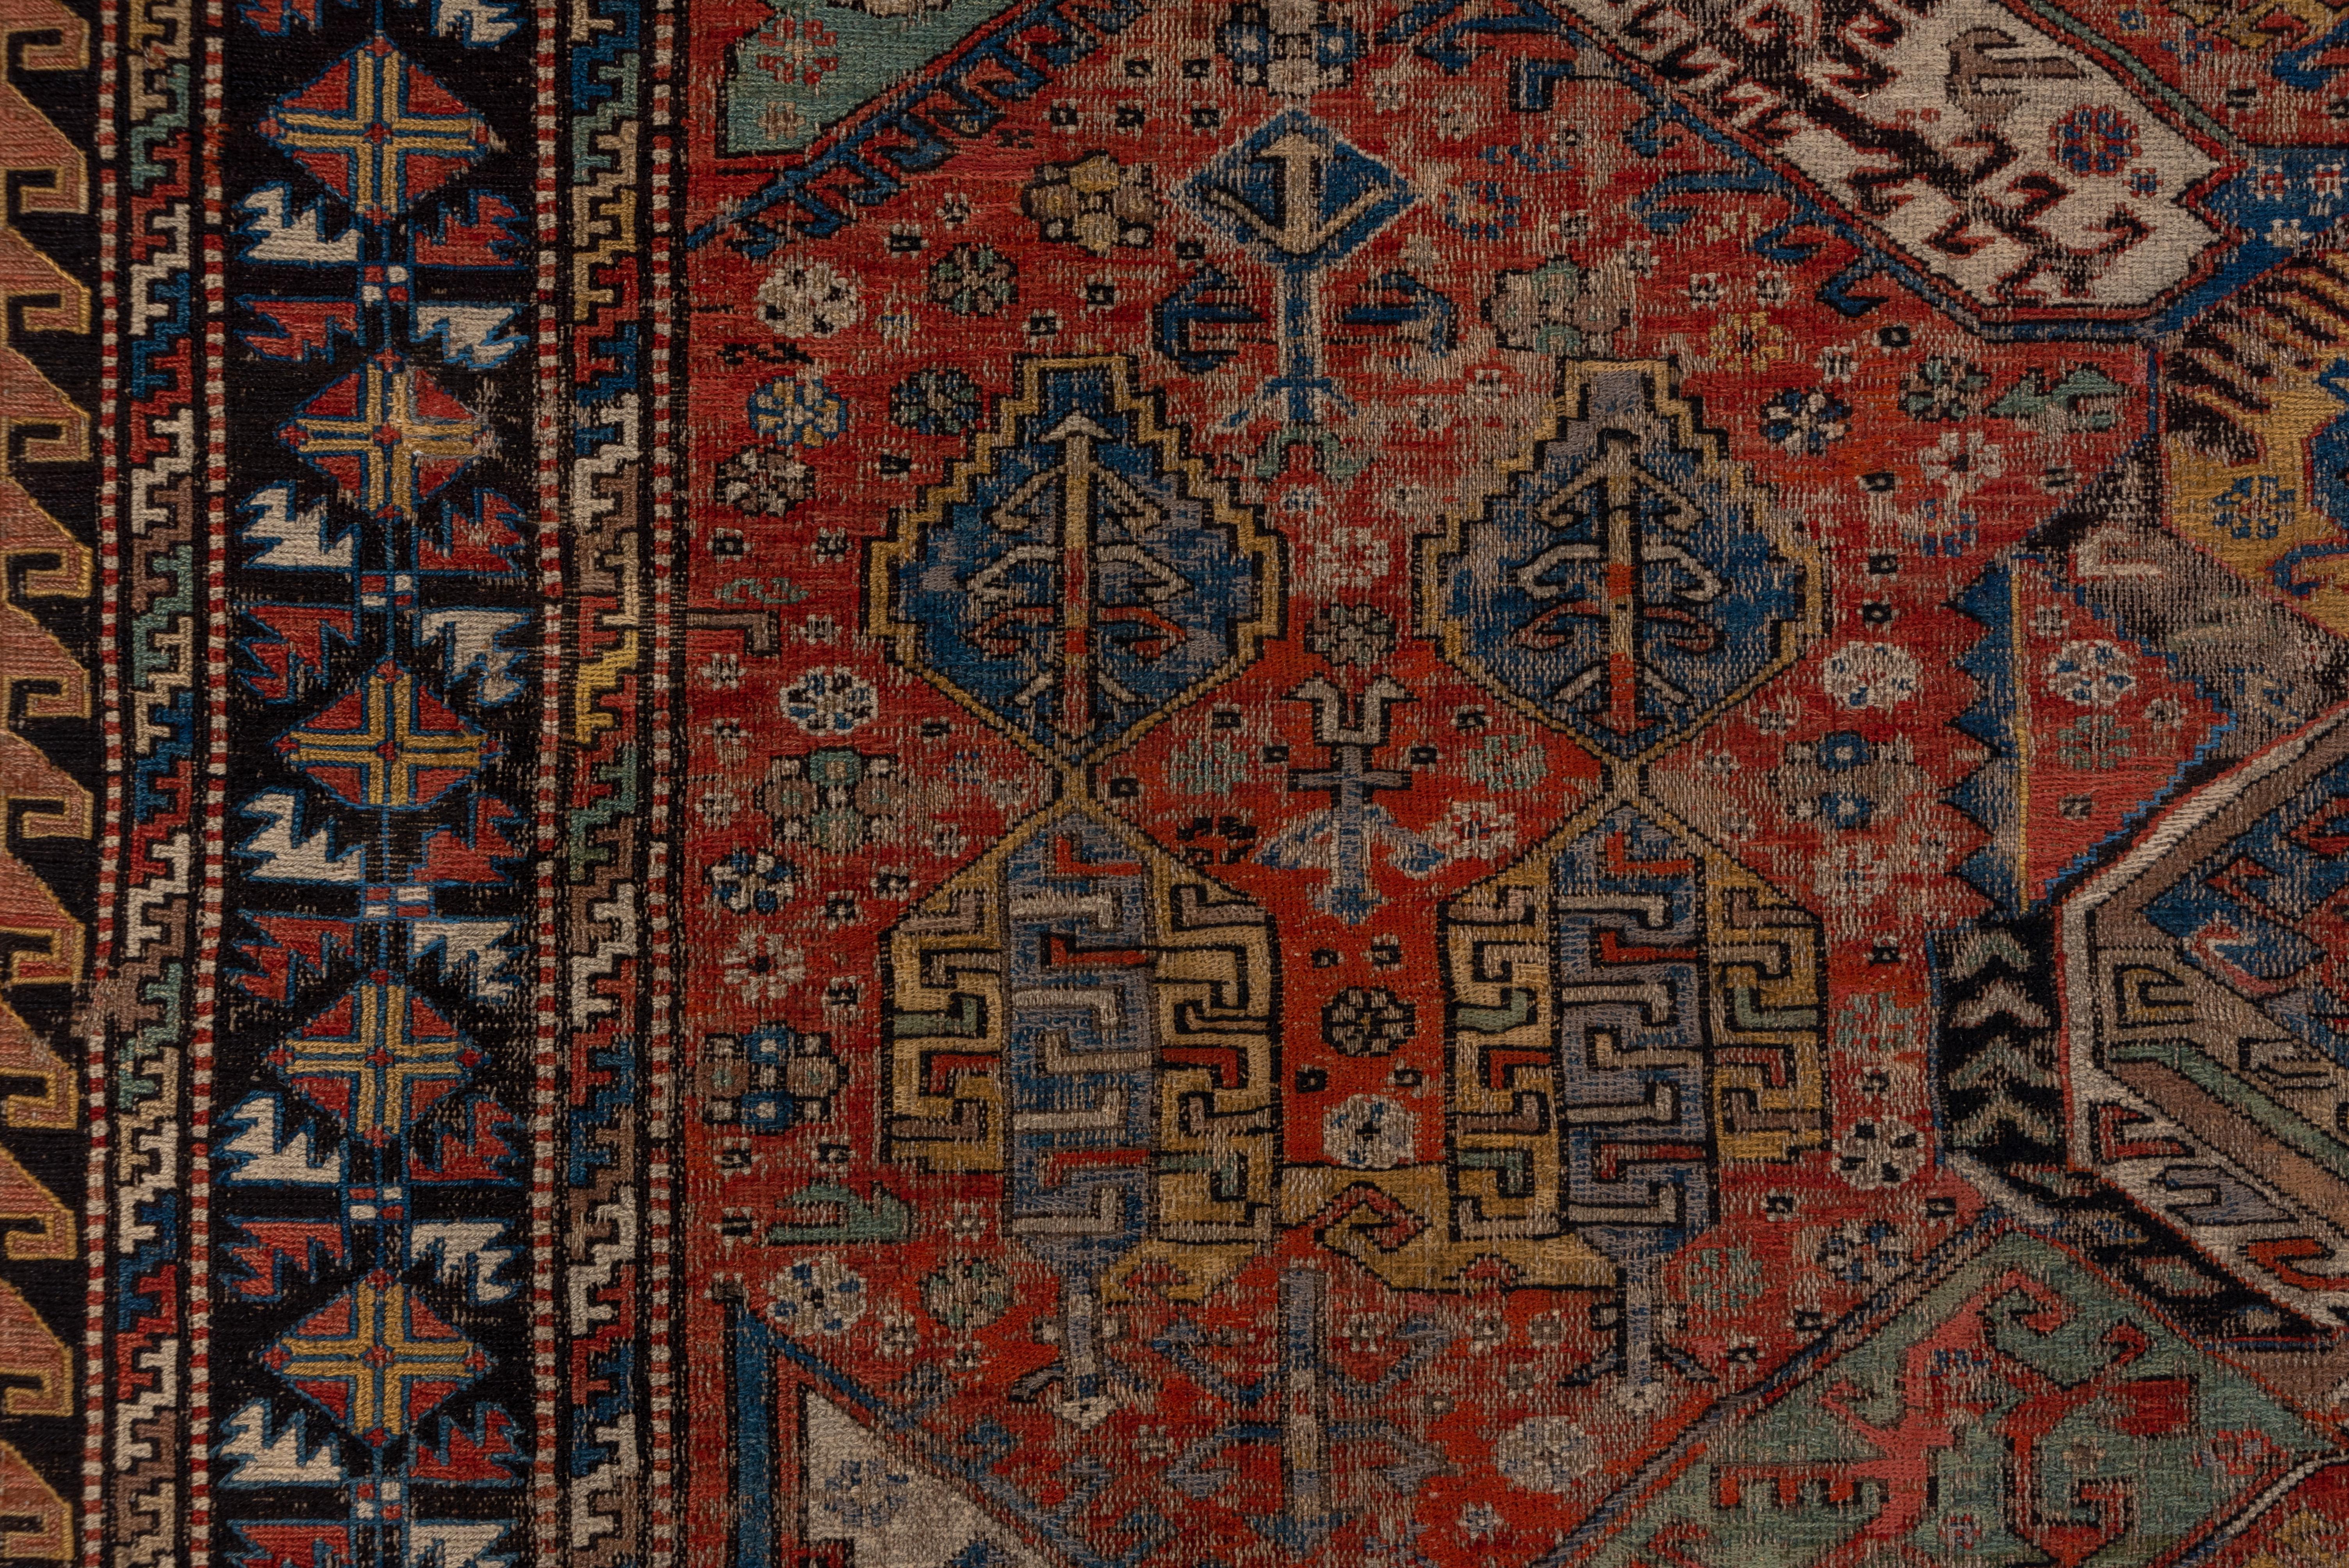 Antique Kuba Caucasian Sumak Carpet, Late 19th Century Handwoven, Colorful For Sale 1